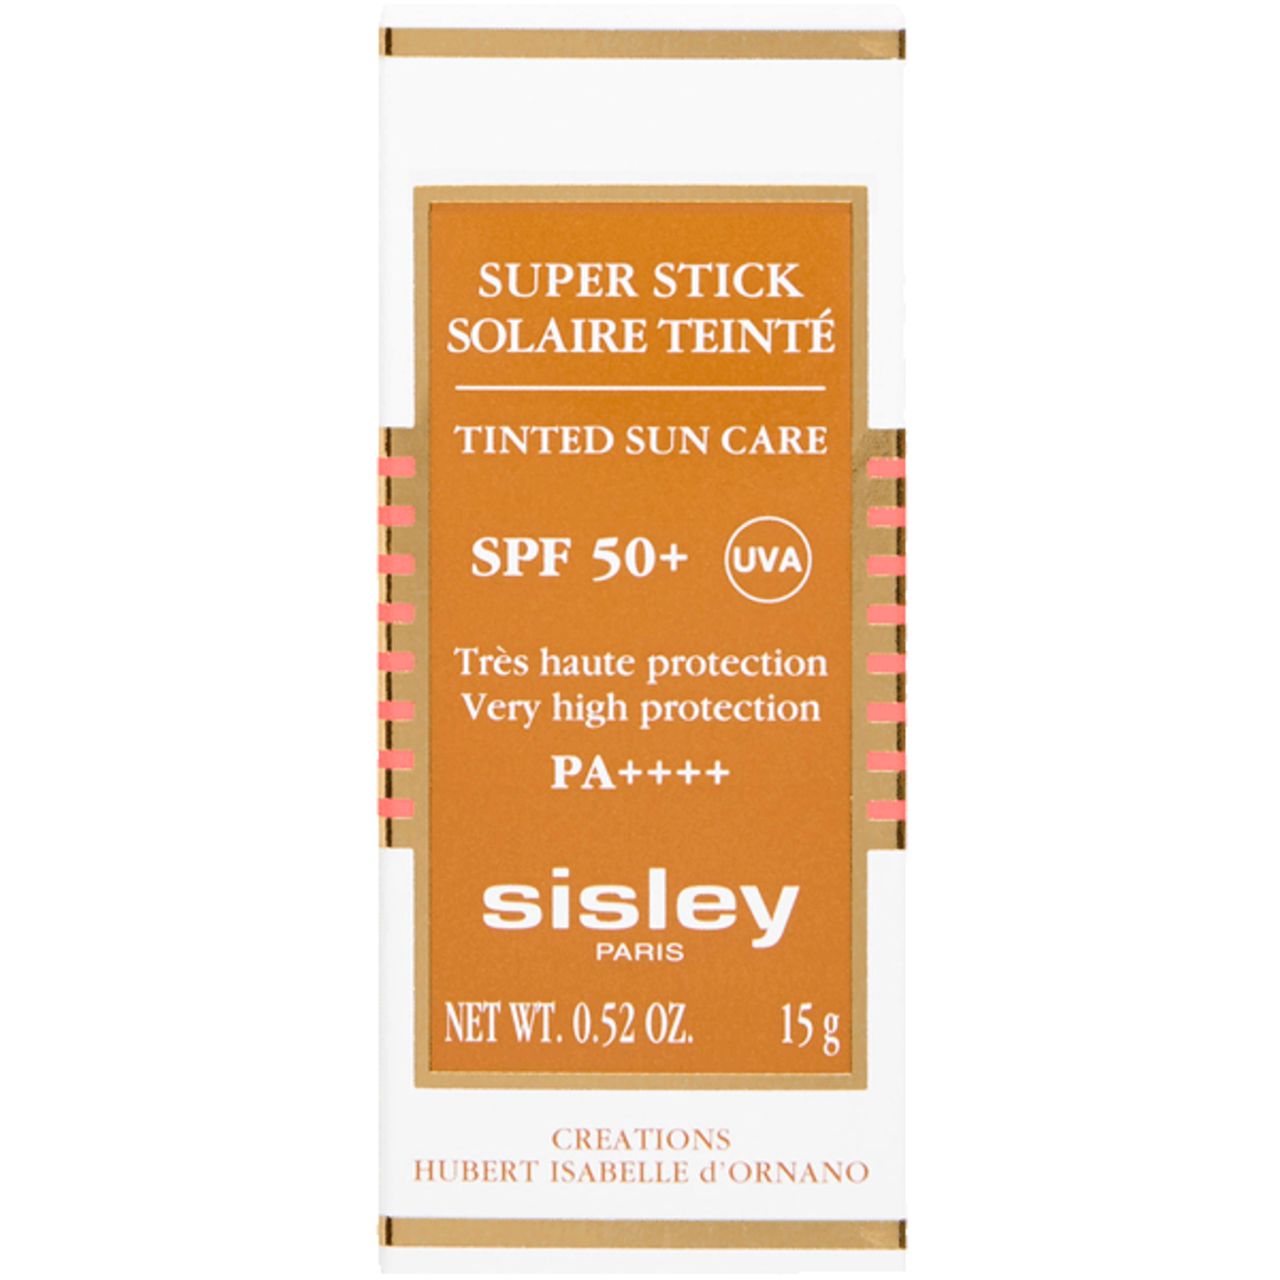 Sisley, Super Stick Solaire Teinte SPF 50+